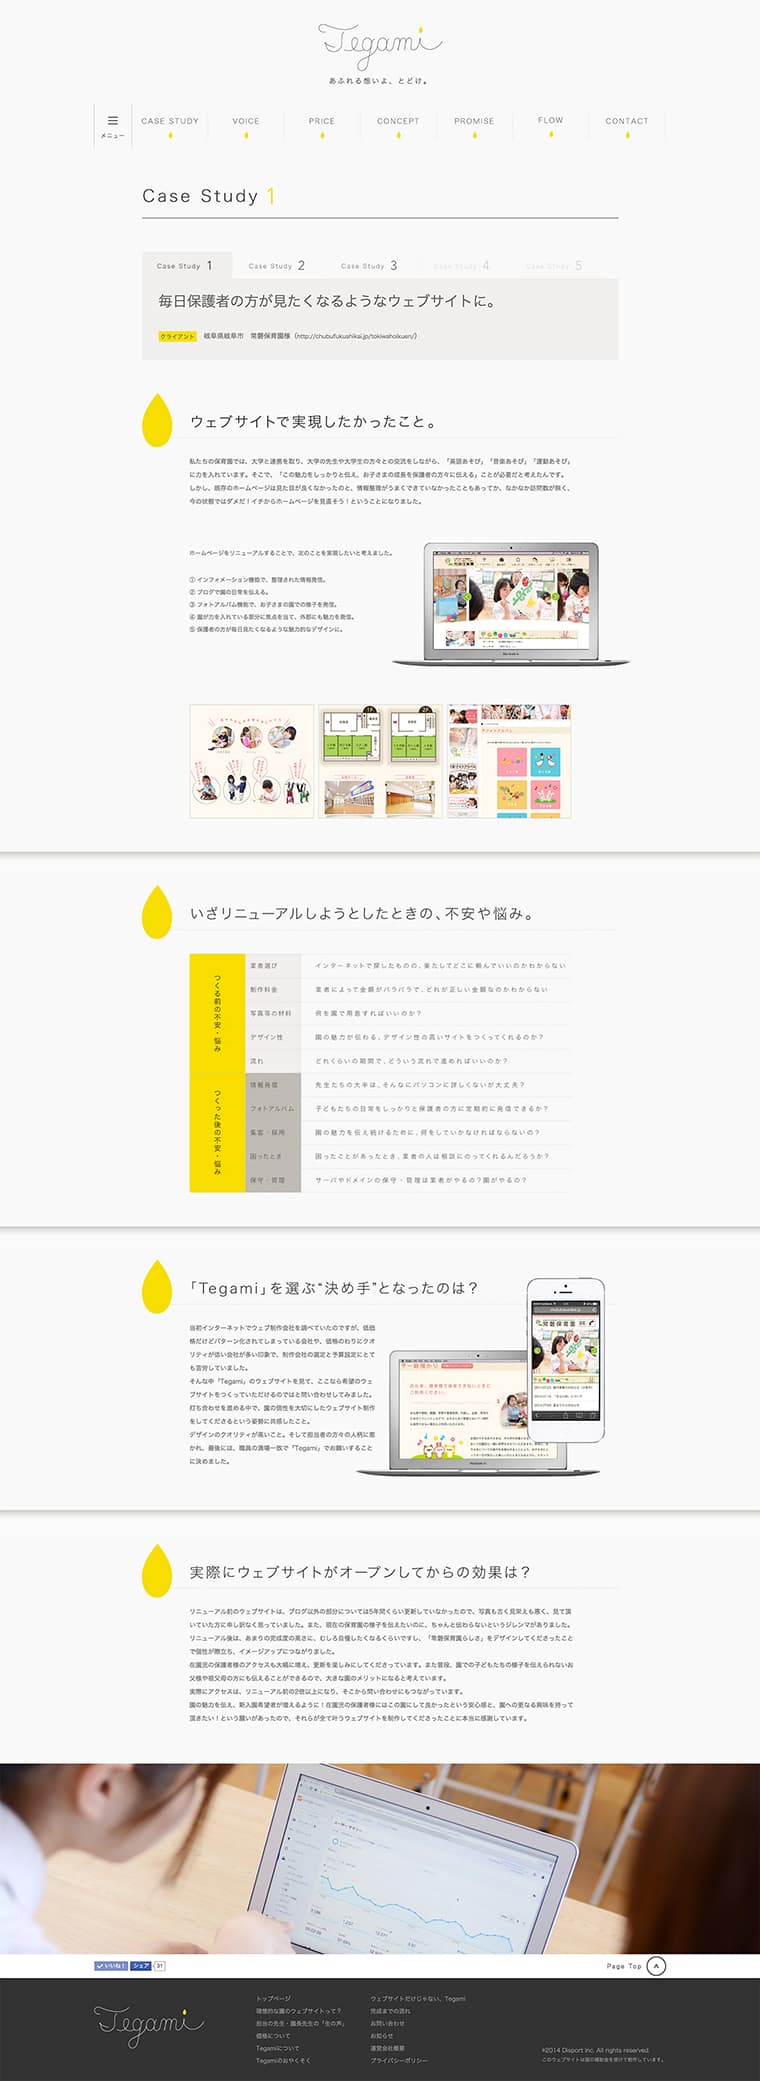 Tegami Webサイトデザイン構築